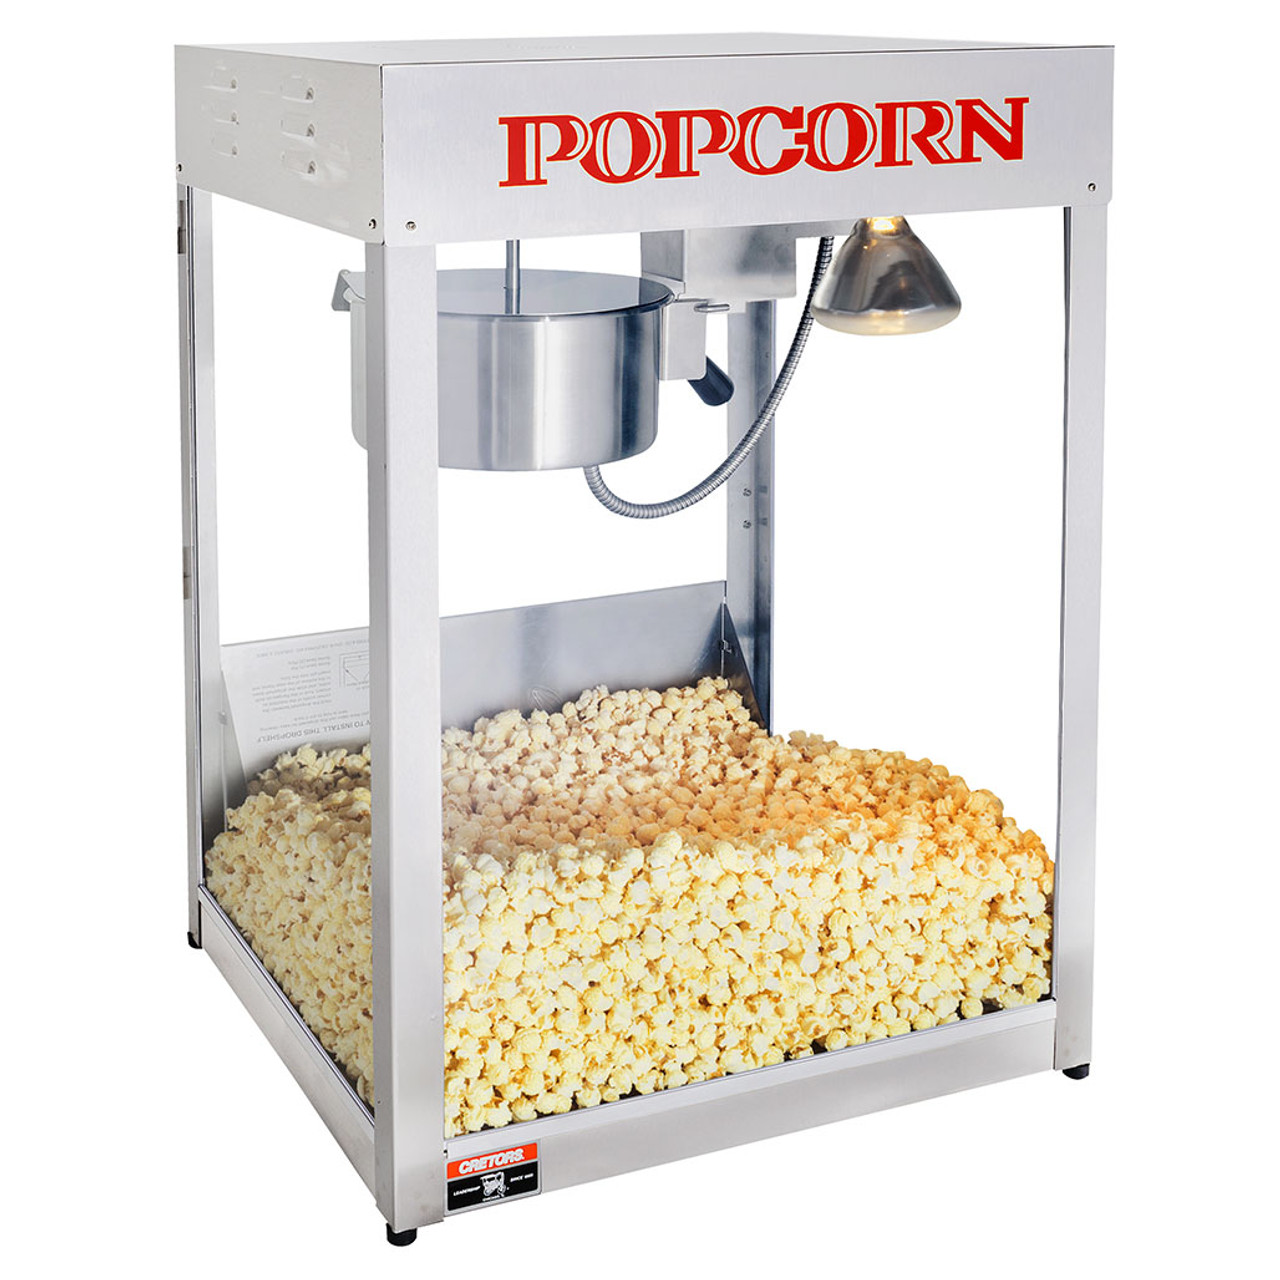 Popcorn Equipment & Supplies Starter Package for a 16-oz. Popcorn Machine